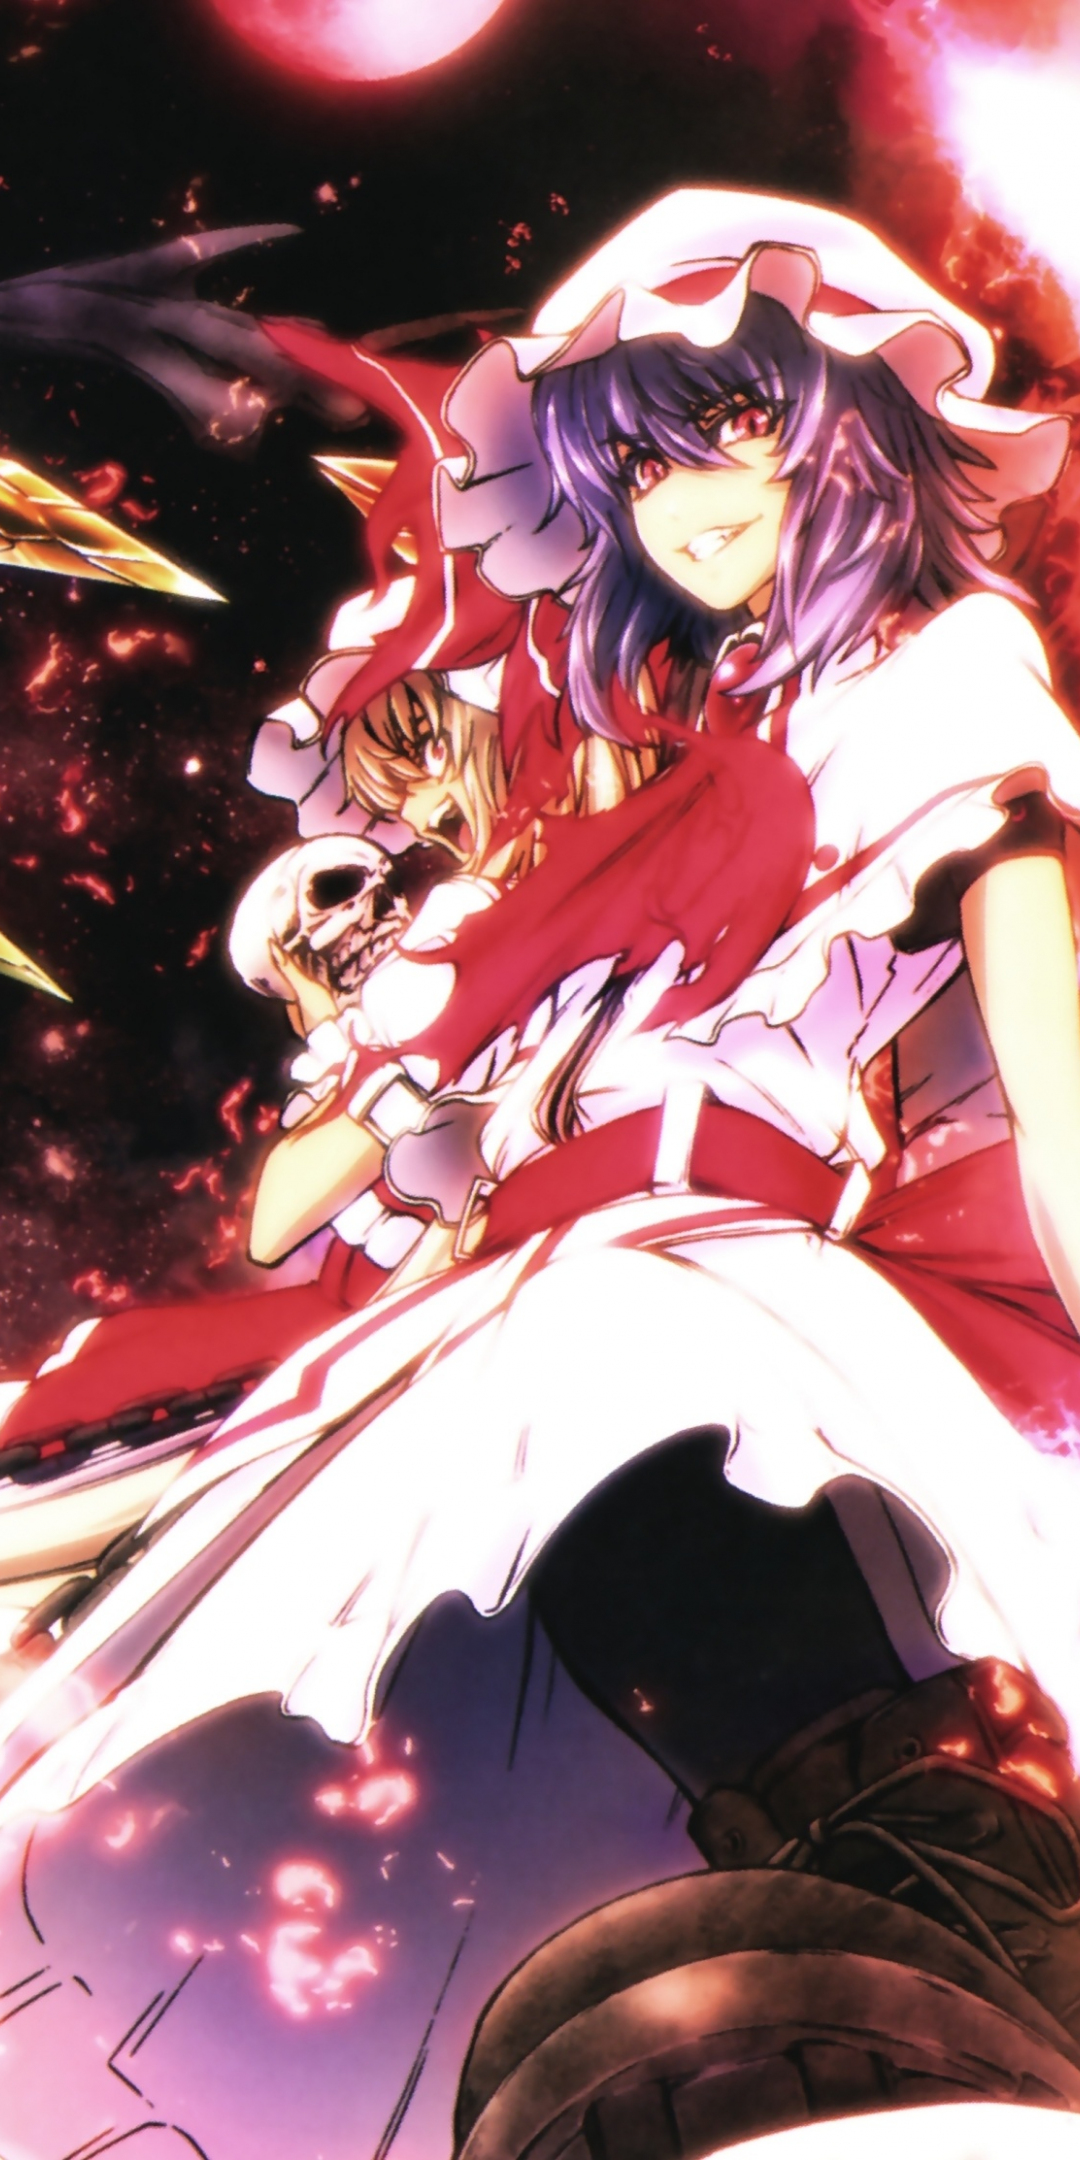 Anime girls, touhou, flandre scarlet, remilia scarlet, 1080x2160 wallpaper